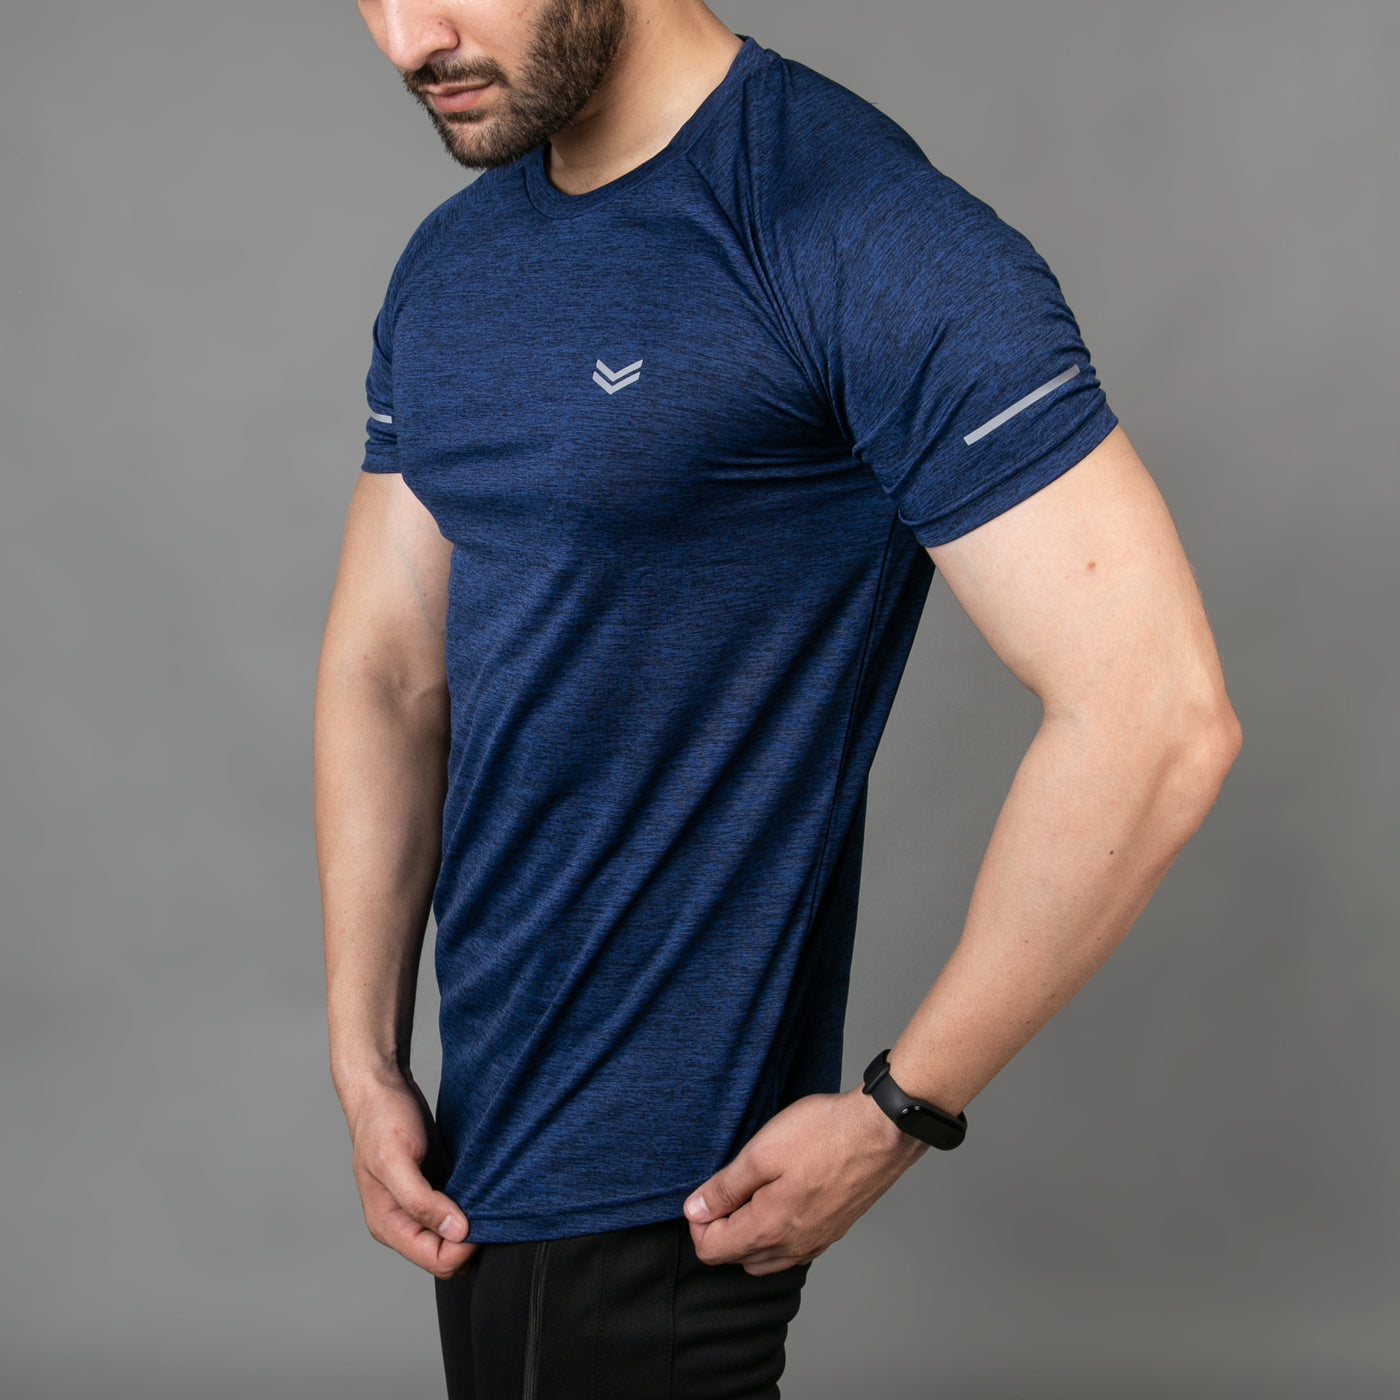 Premium Navy Melange Quick Dry T-Shirt With Reflective Detailing